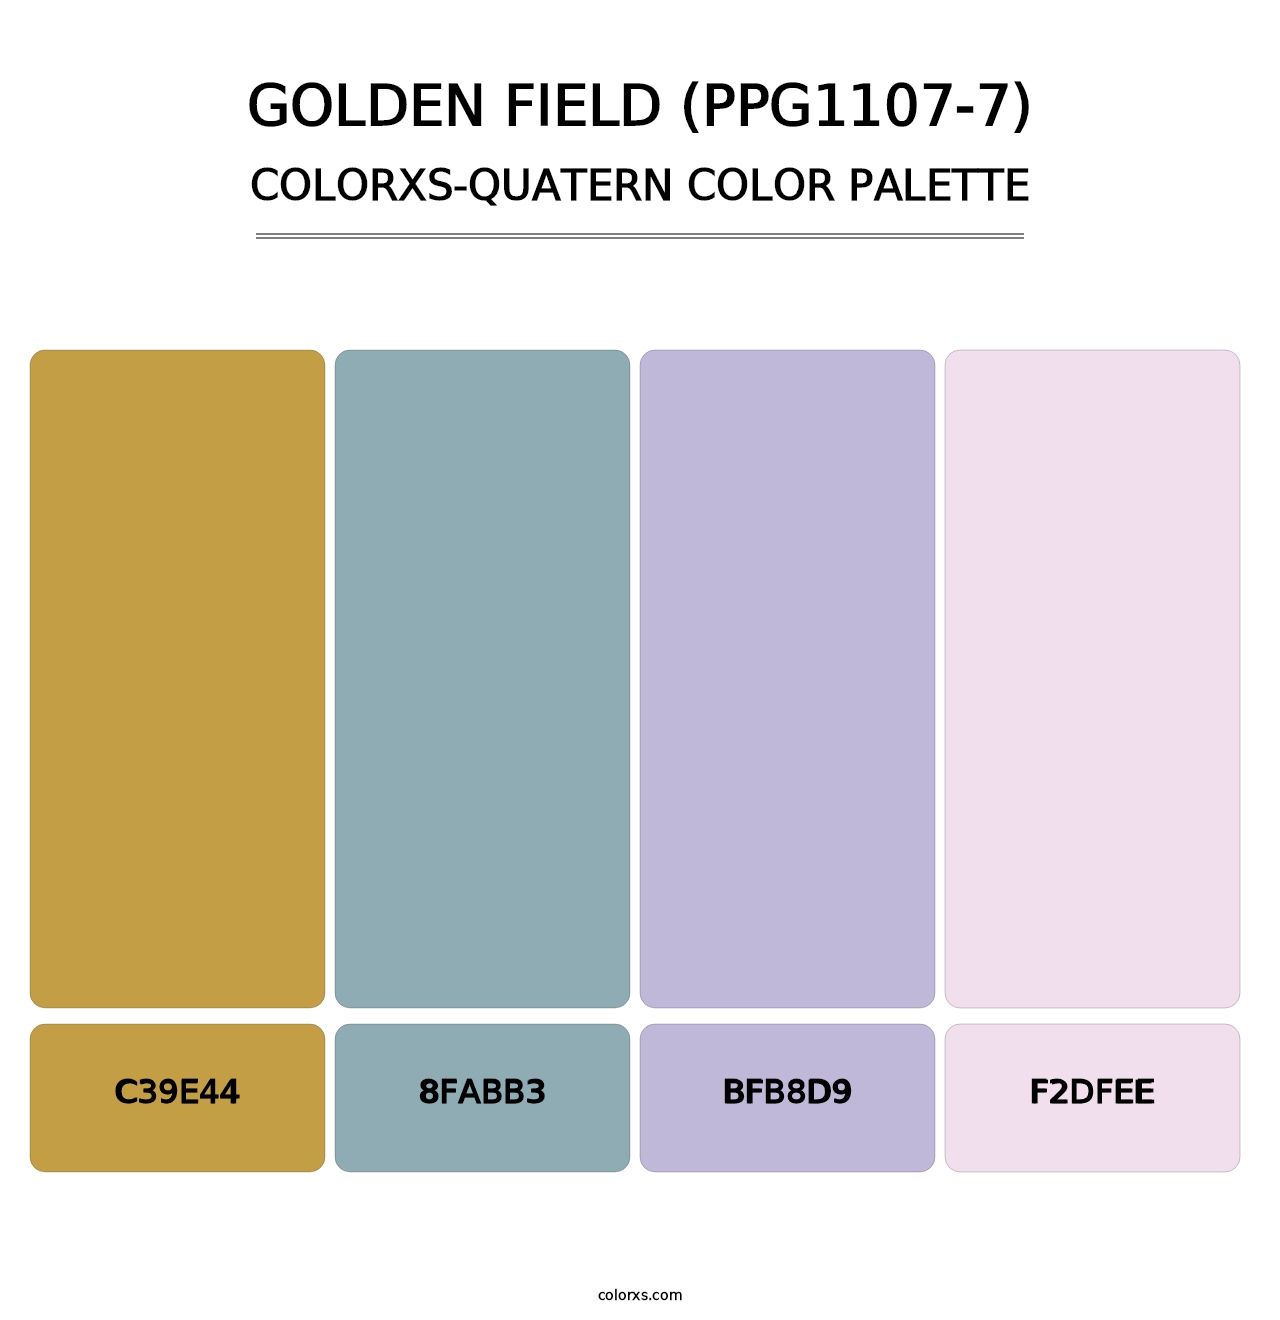 Golden Field (PPG1107-7) - Colorxs Quatern Palette